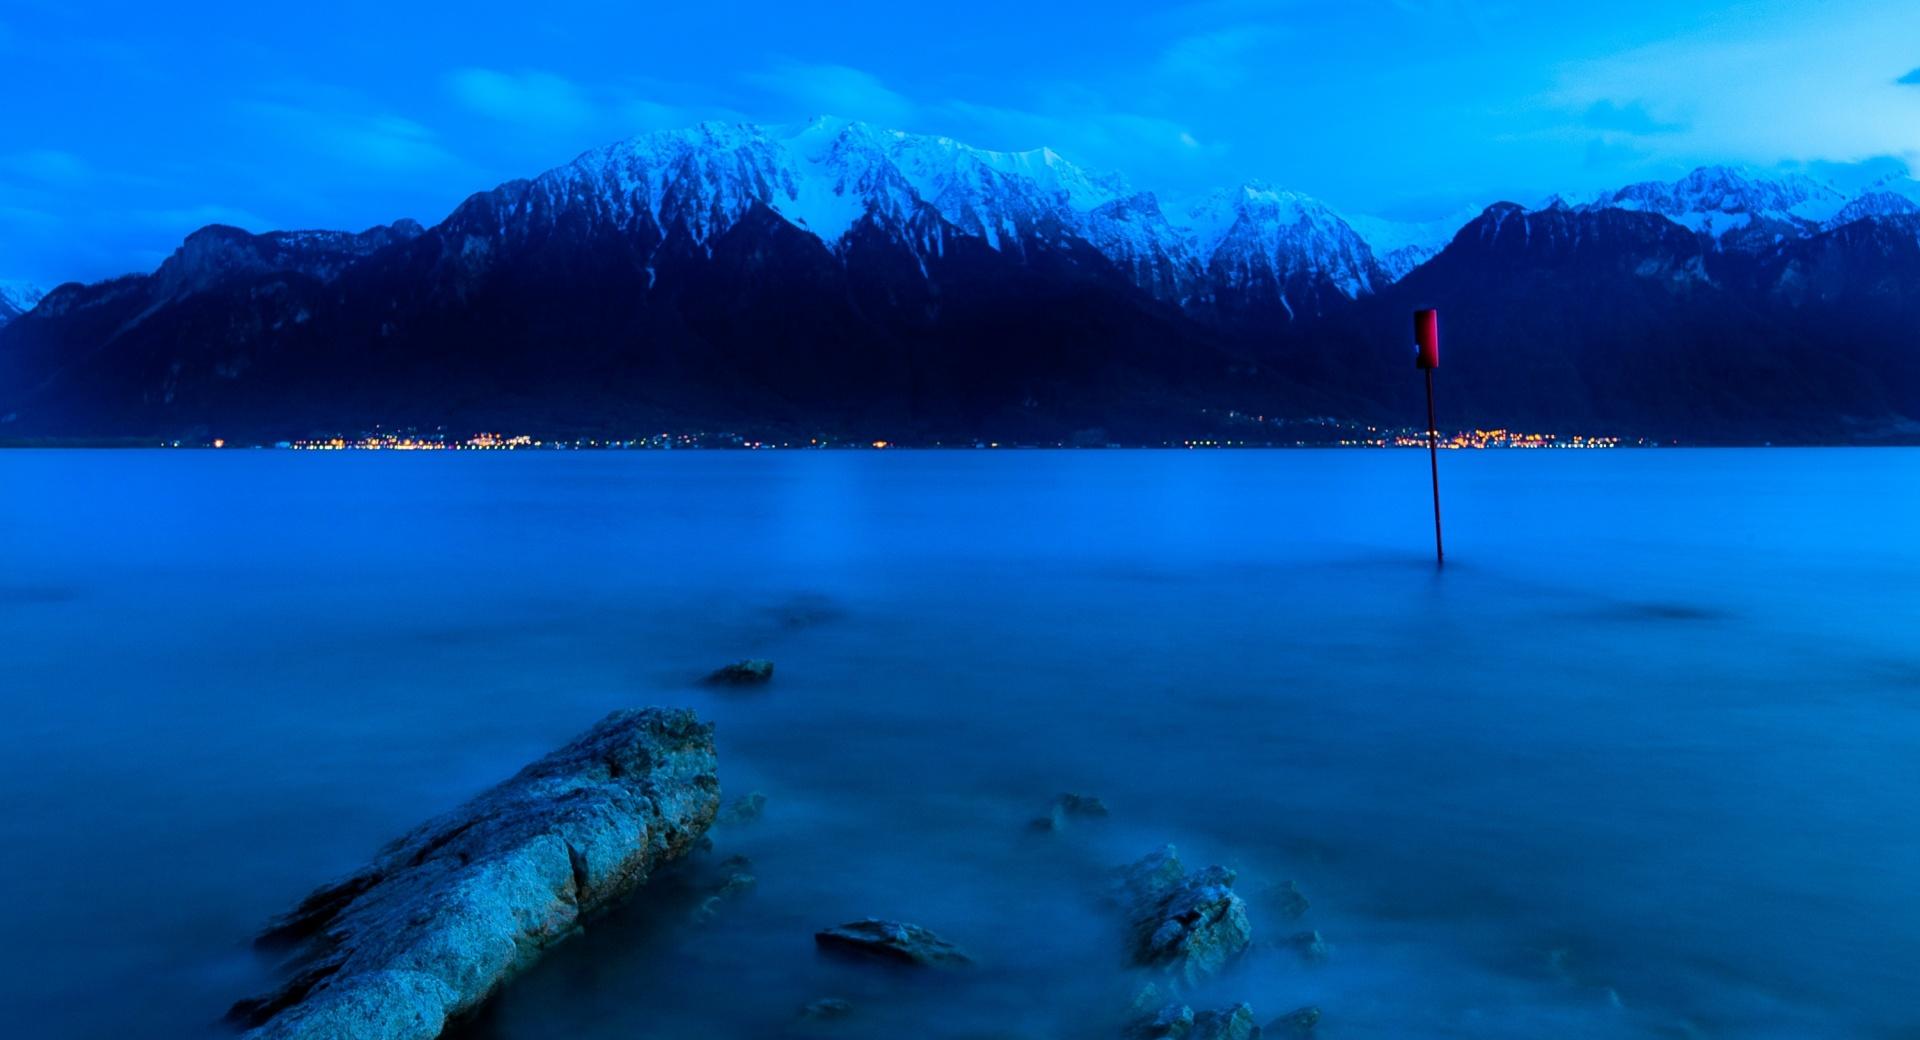 Lake At Night at 1024 x 768 size wallpapers HD quality